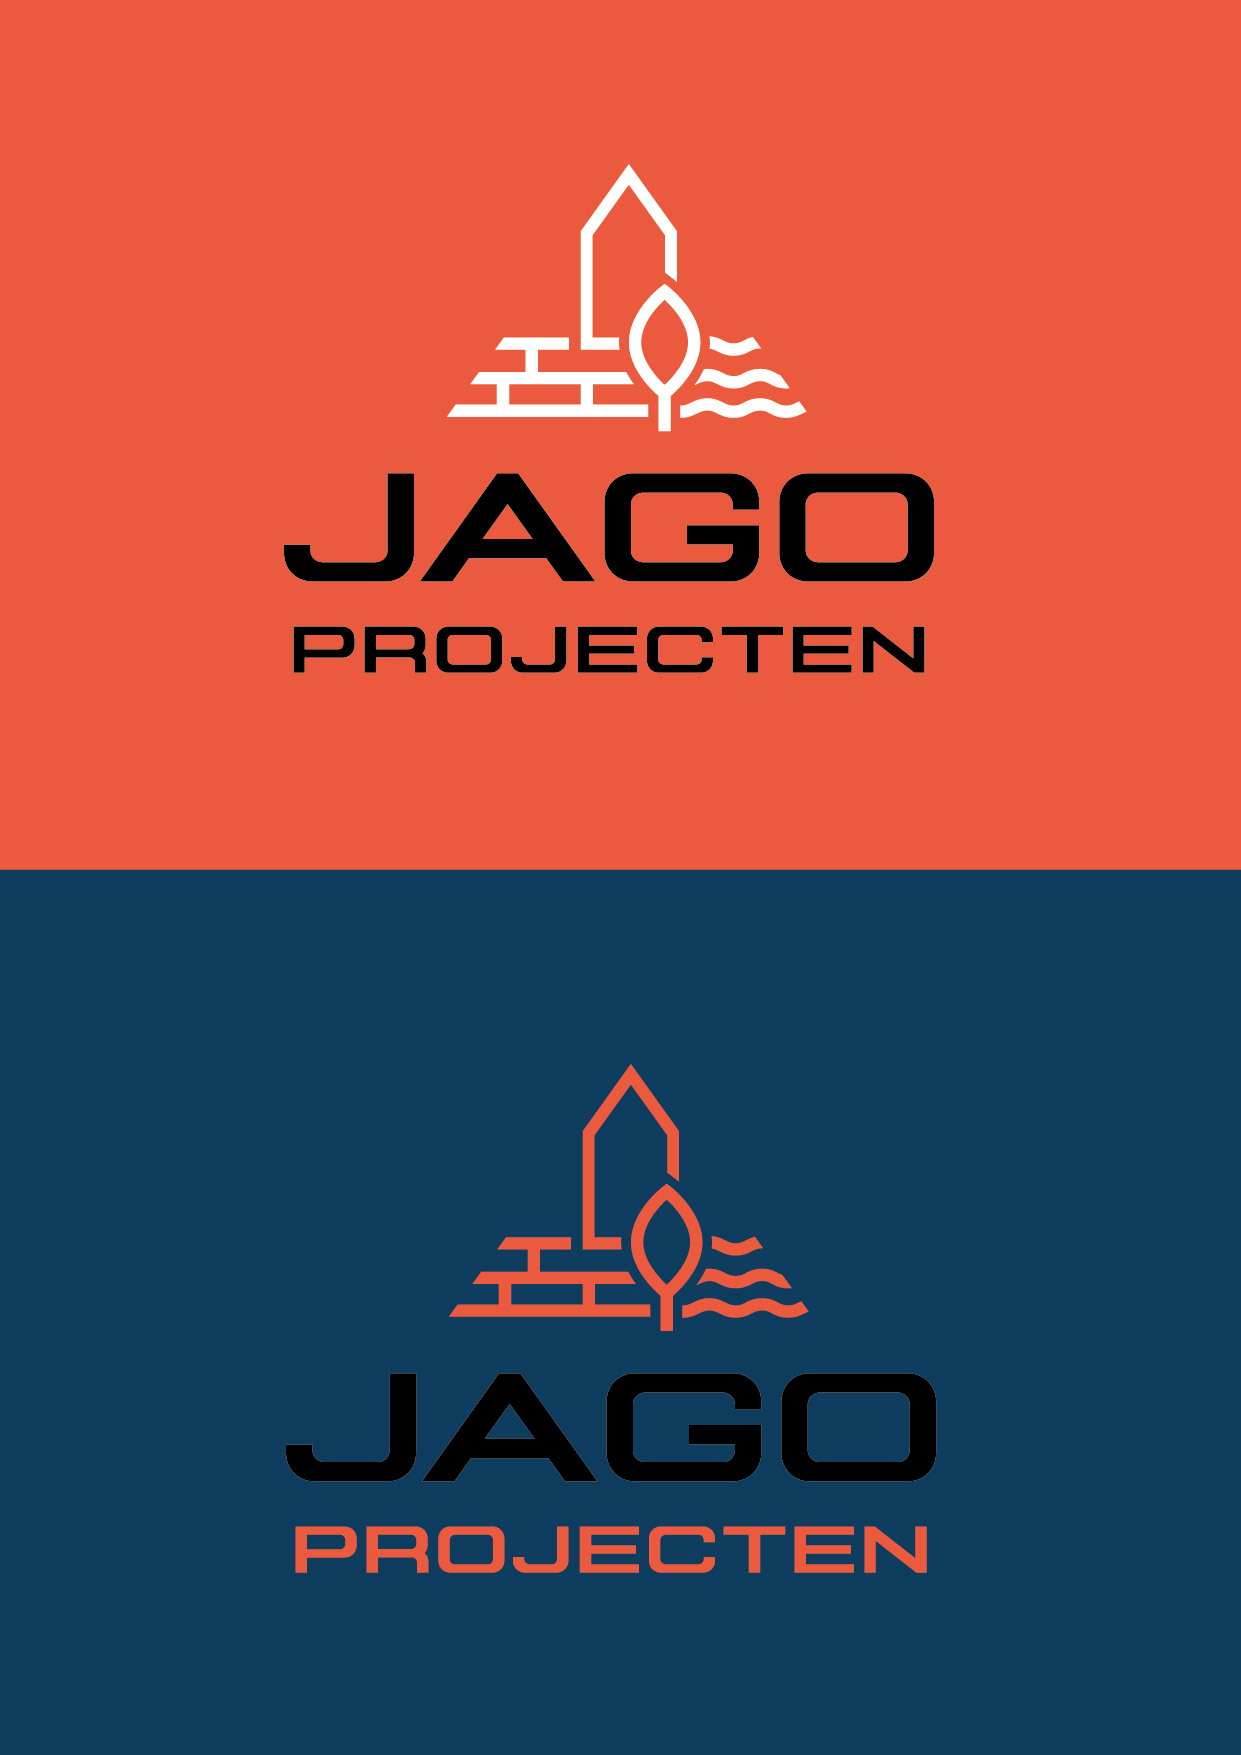 Jago Projecten